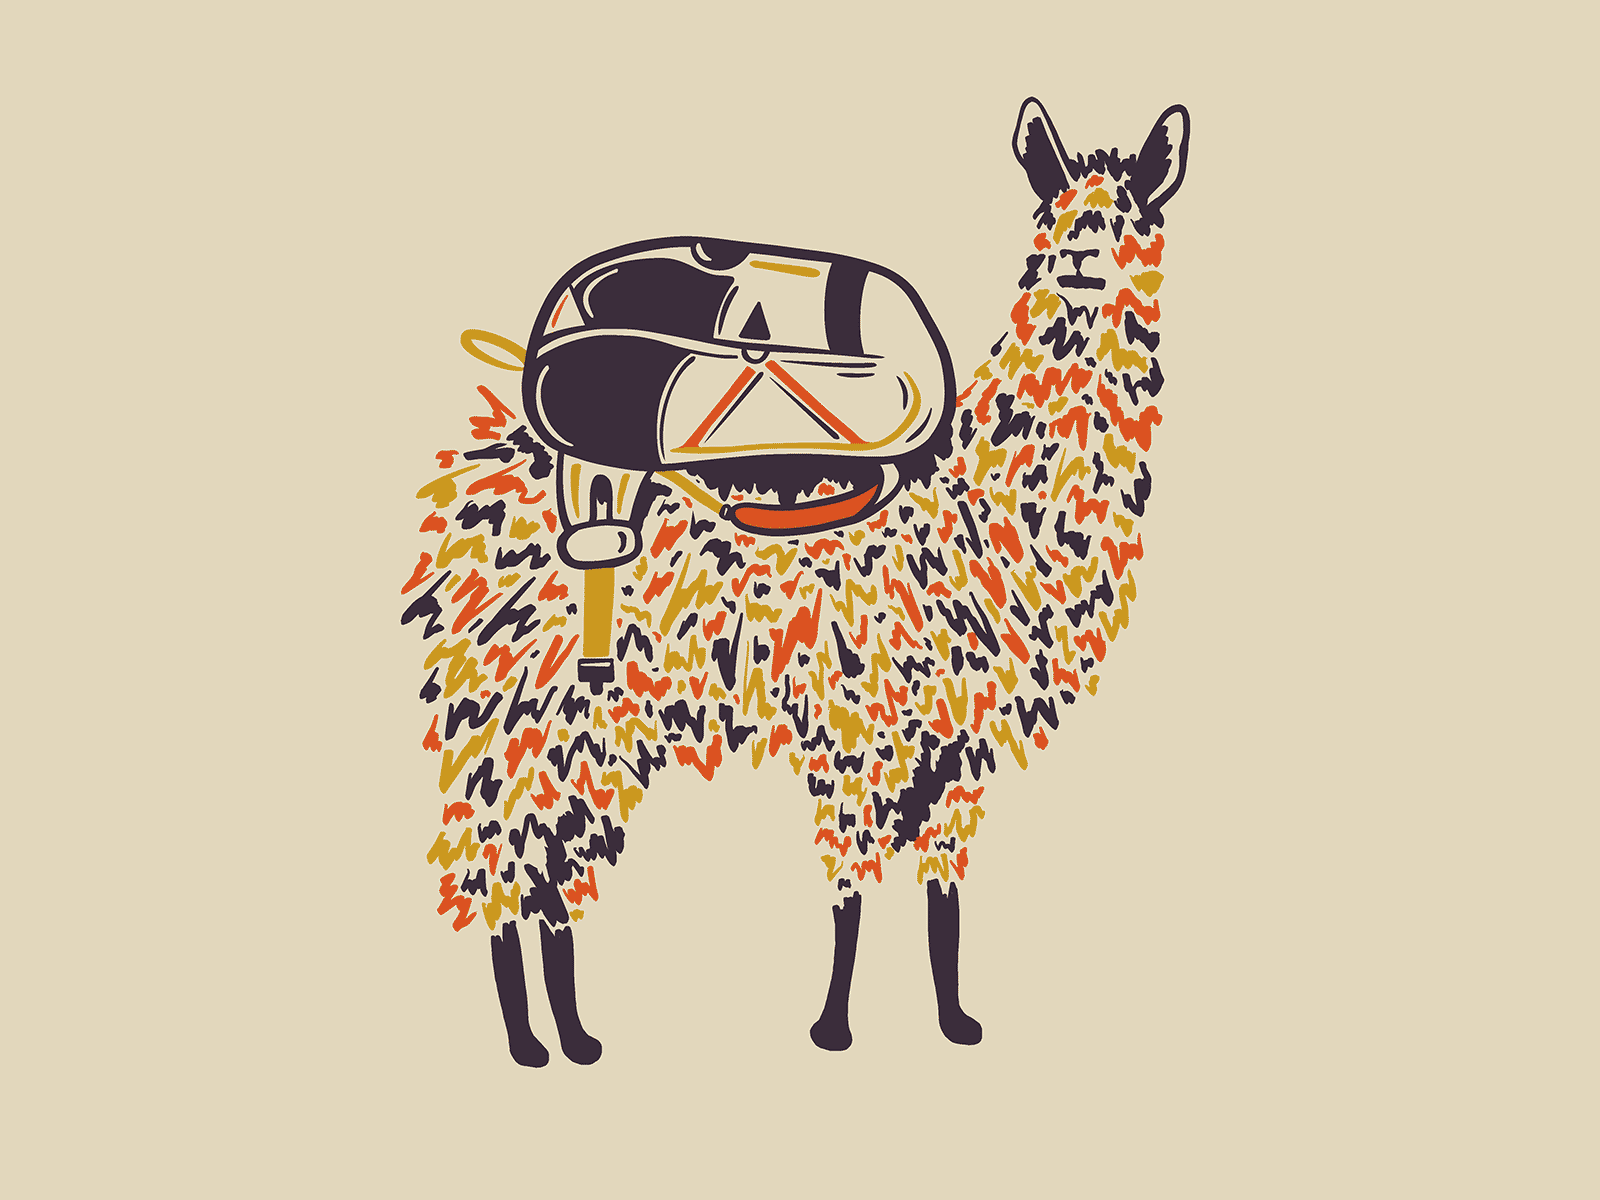 A llama for an outdoor gear brand.